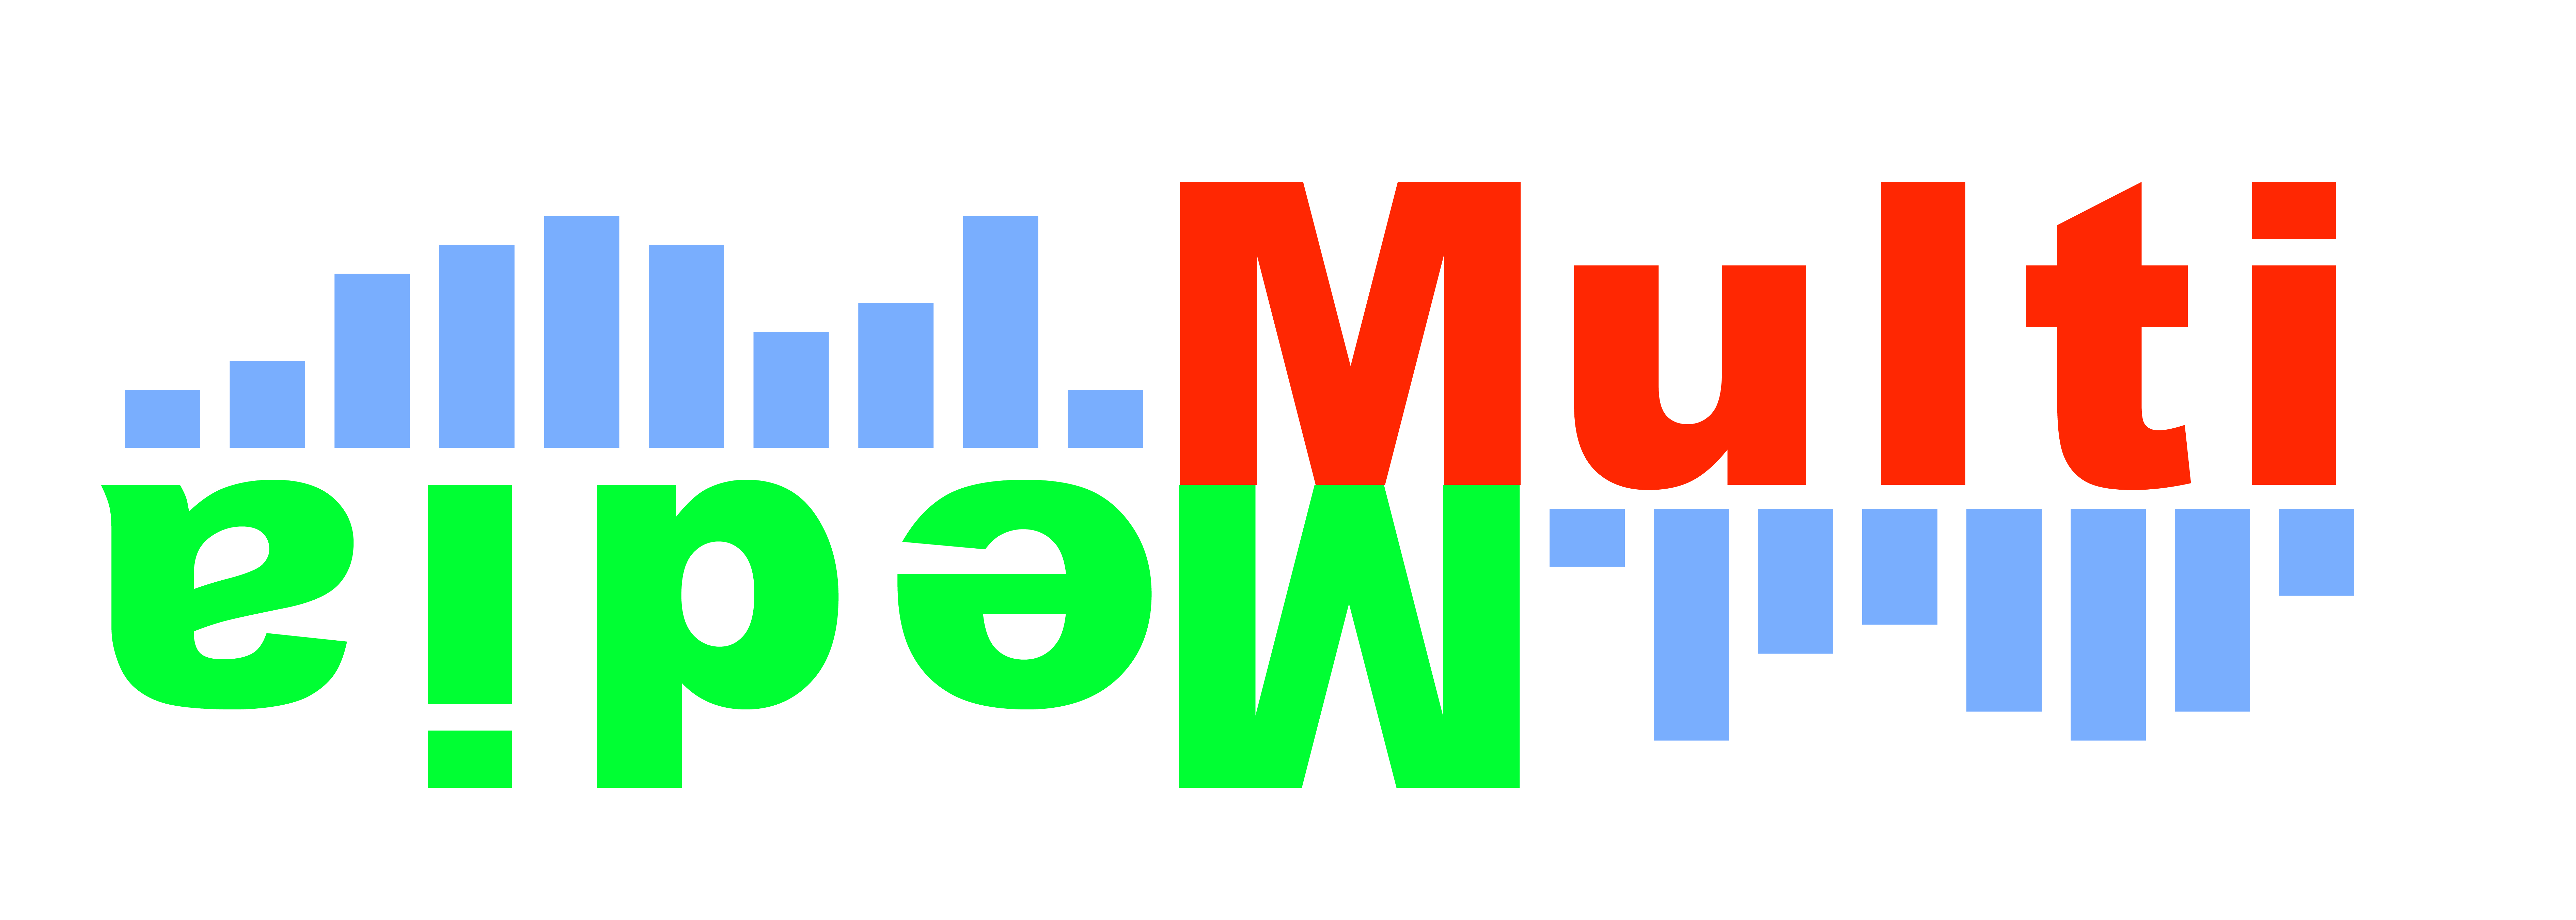 mm_logo